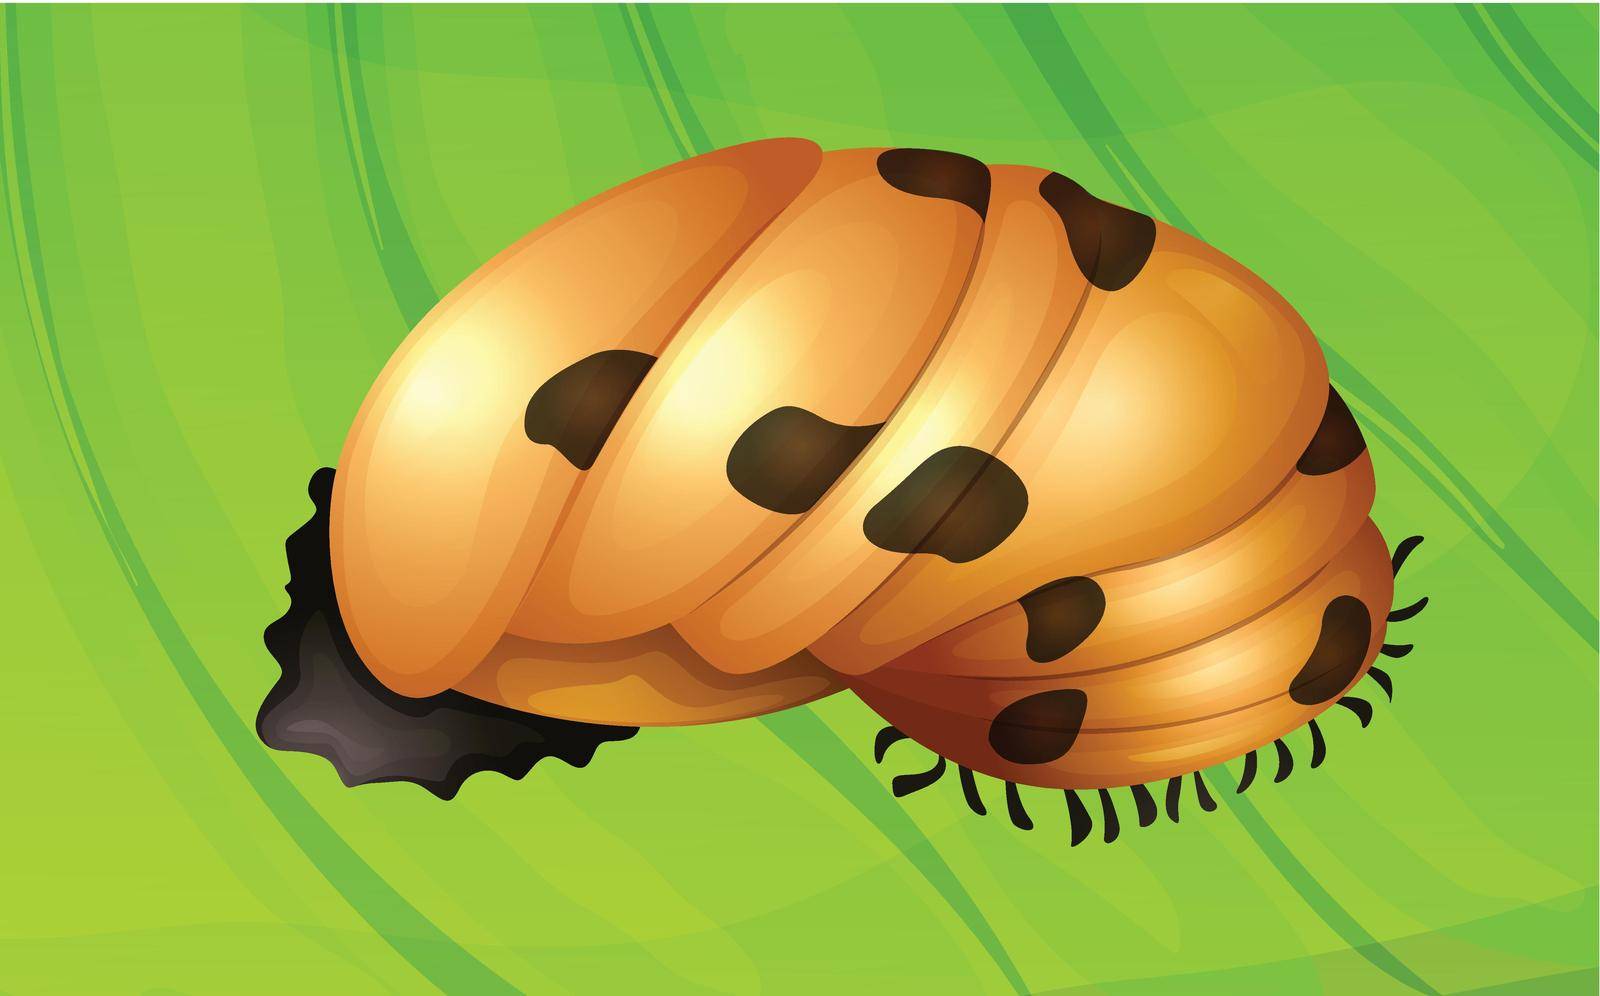 Illustration of a ladybug life cycle - pupa stage